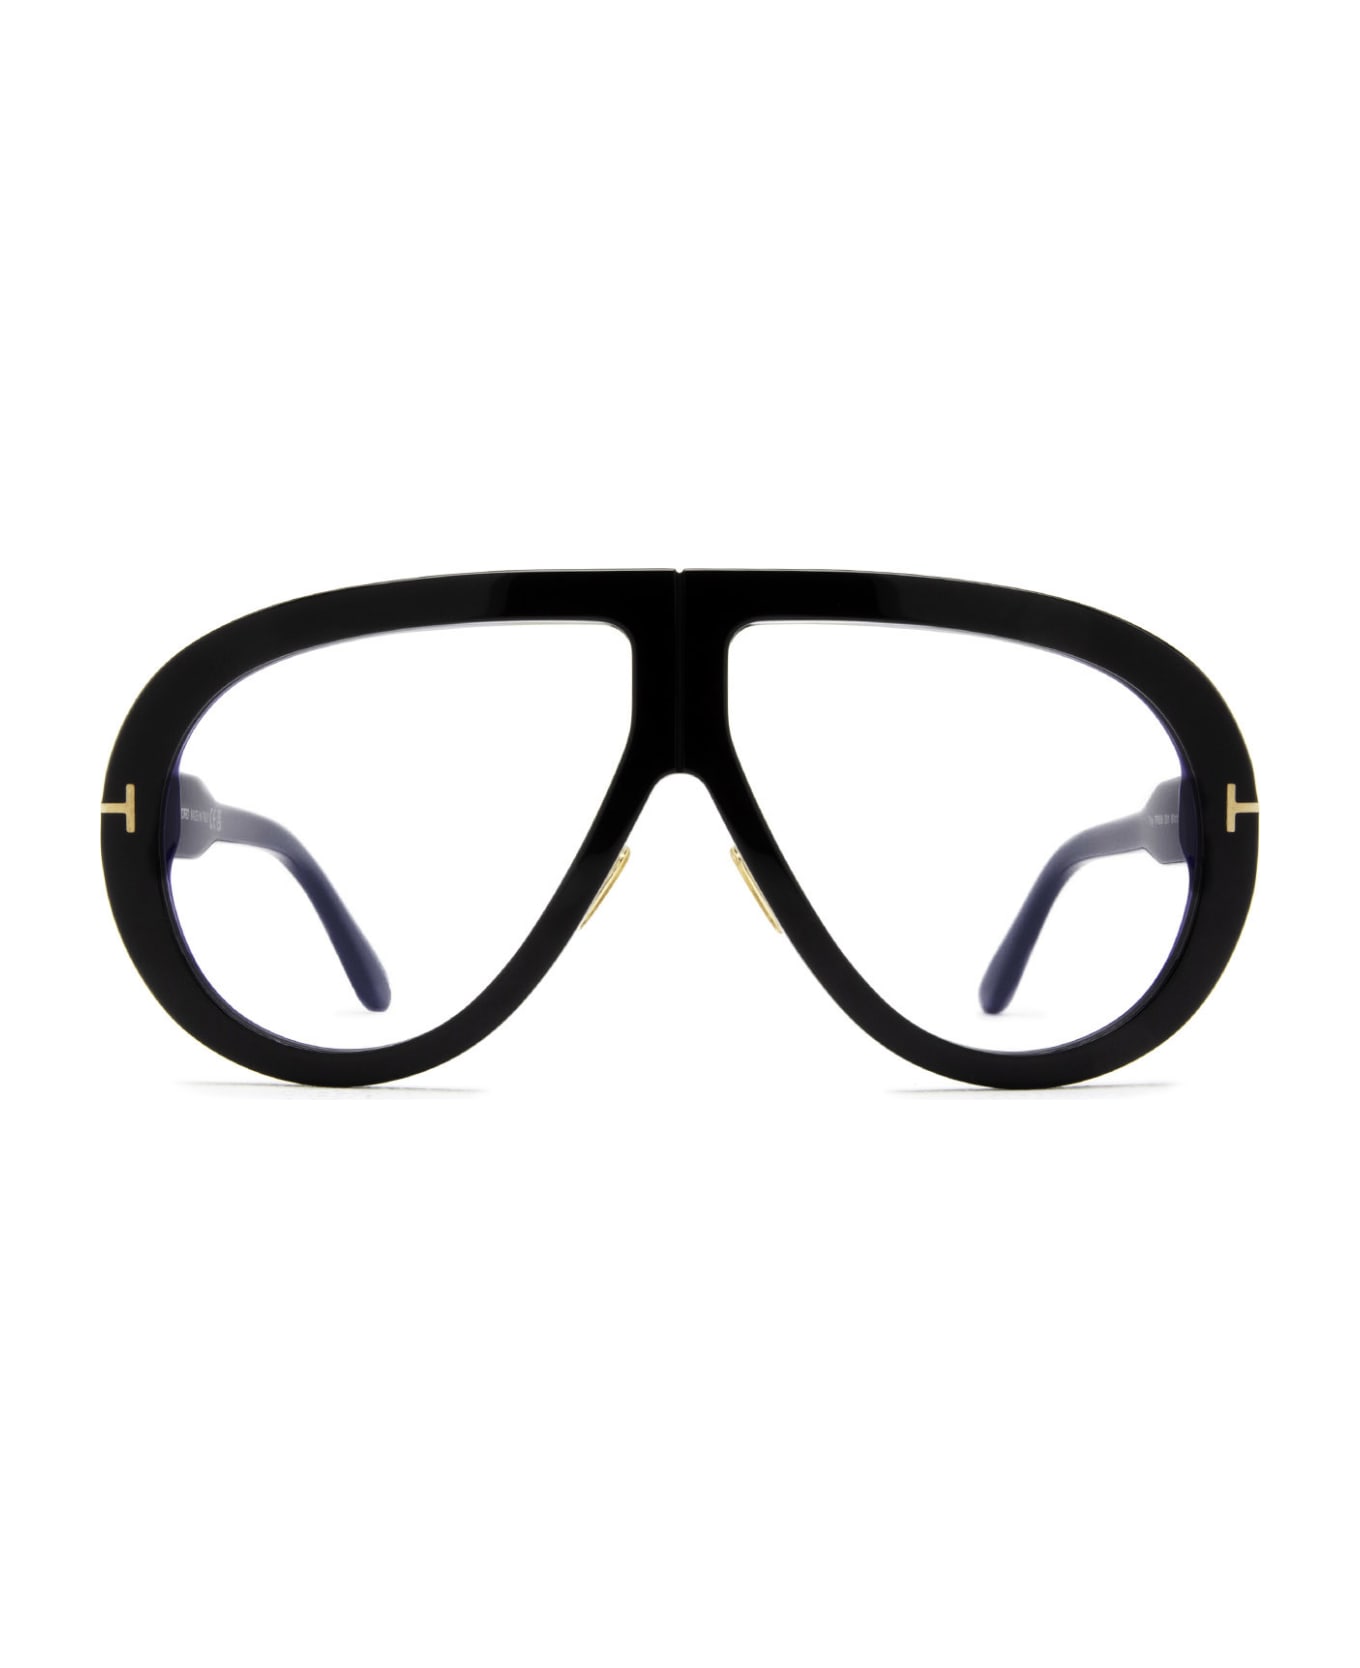 Tom Ford Eyewear Ft0836 Black Sunglasses - Black